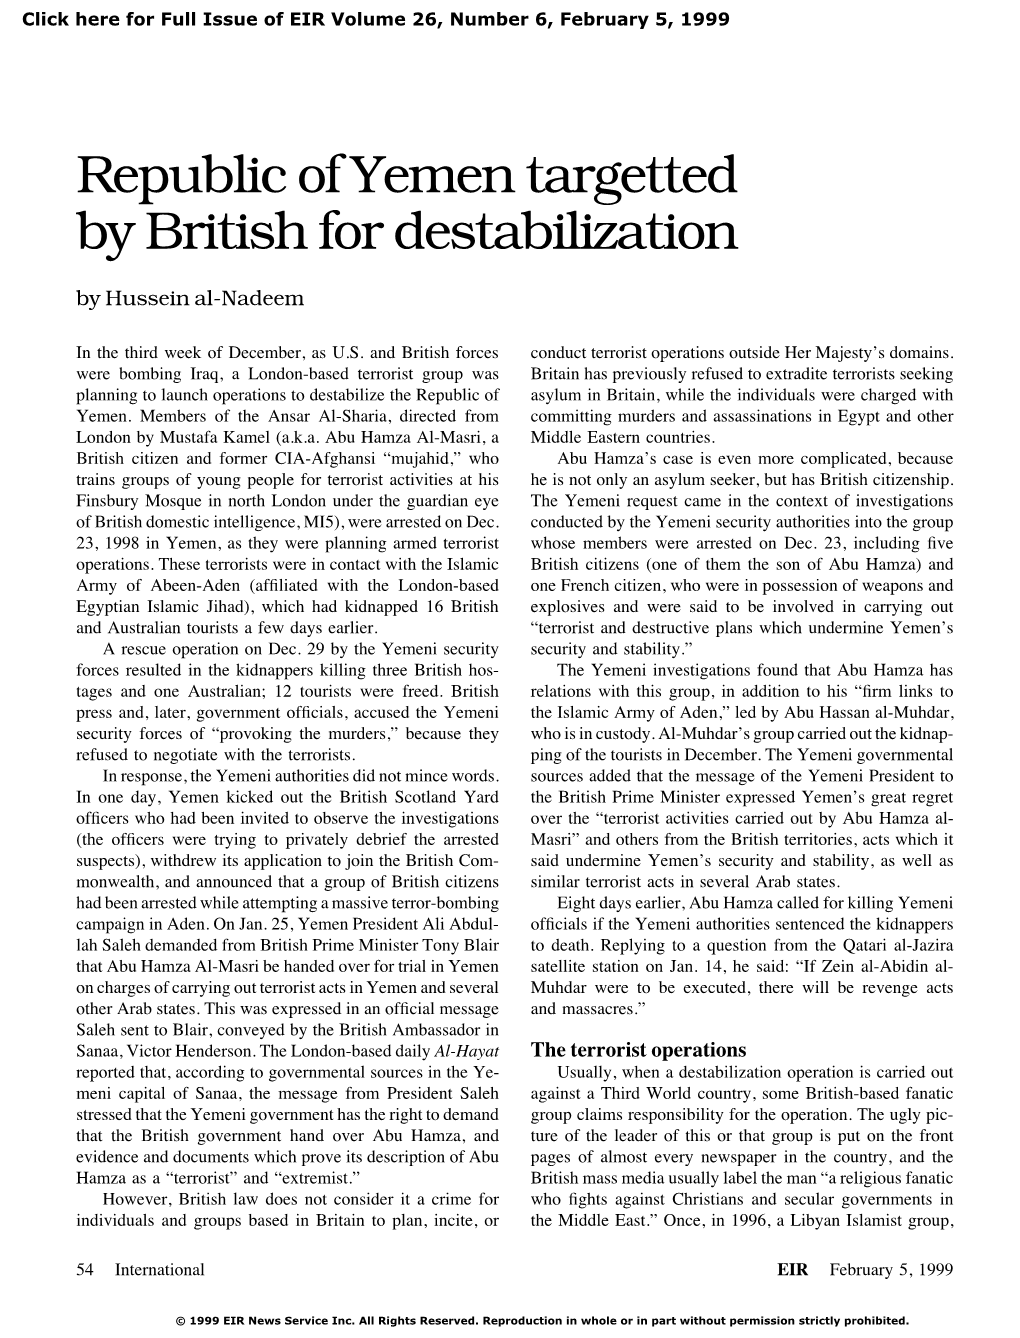 Republic of Yemen Targetted by British for Destabilization